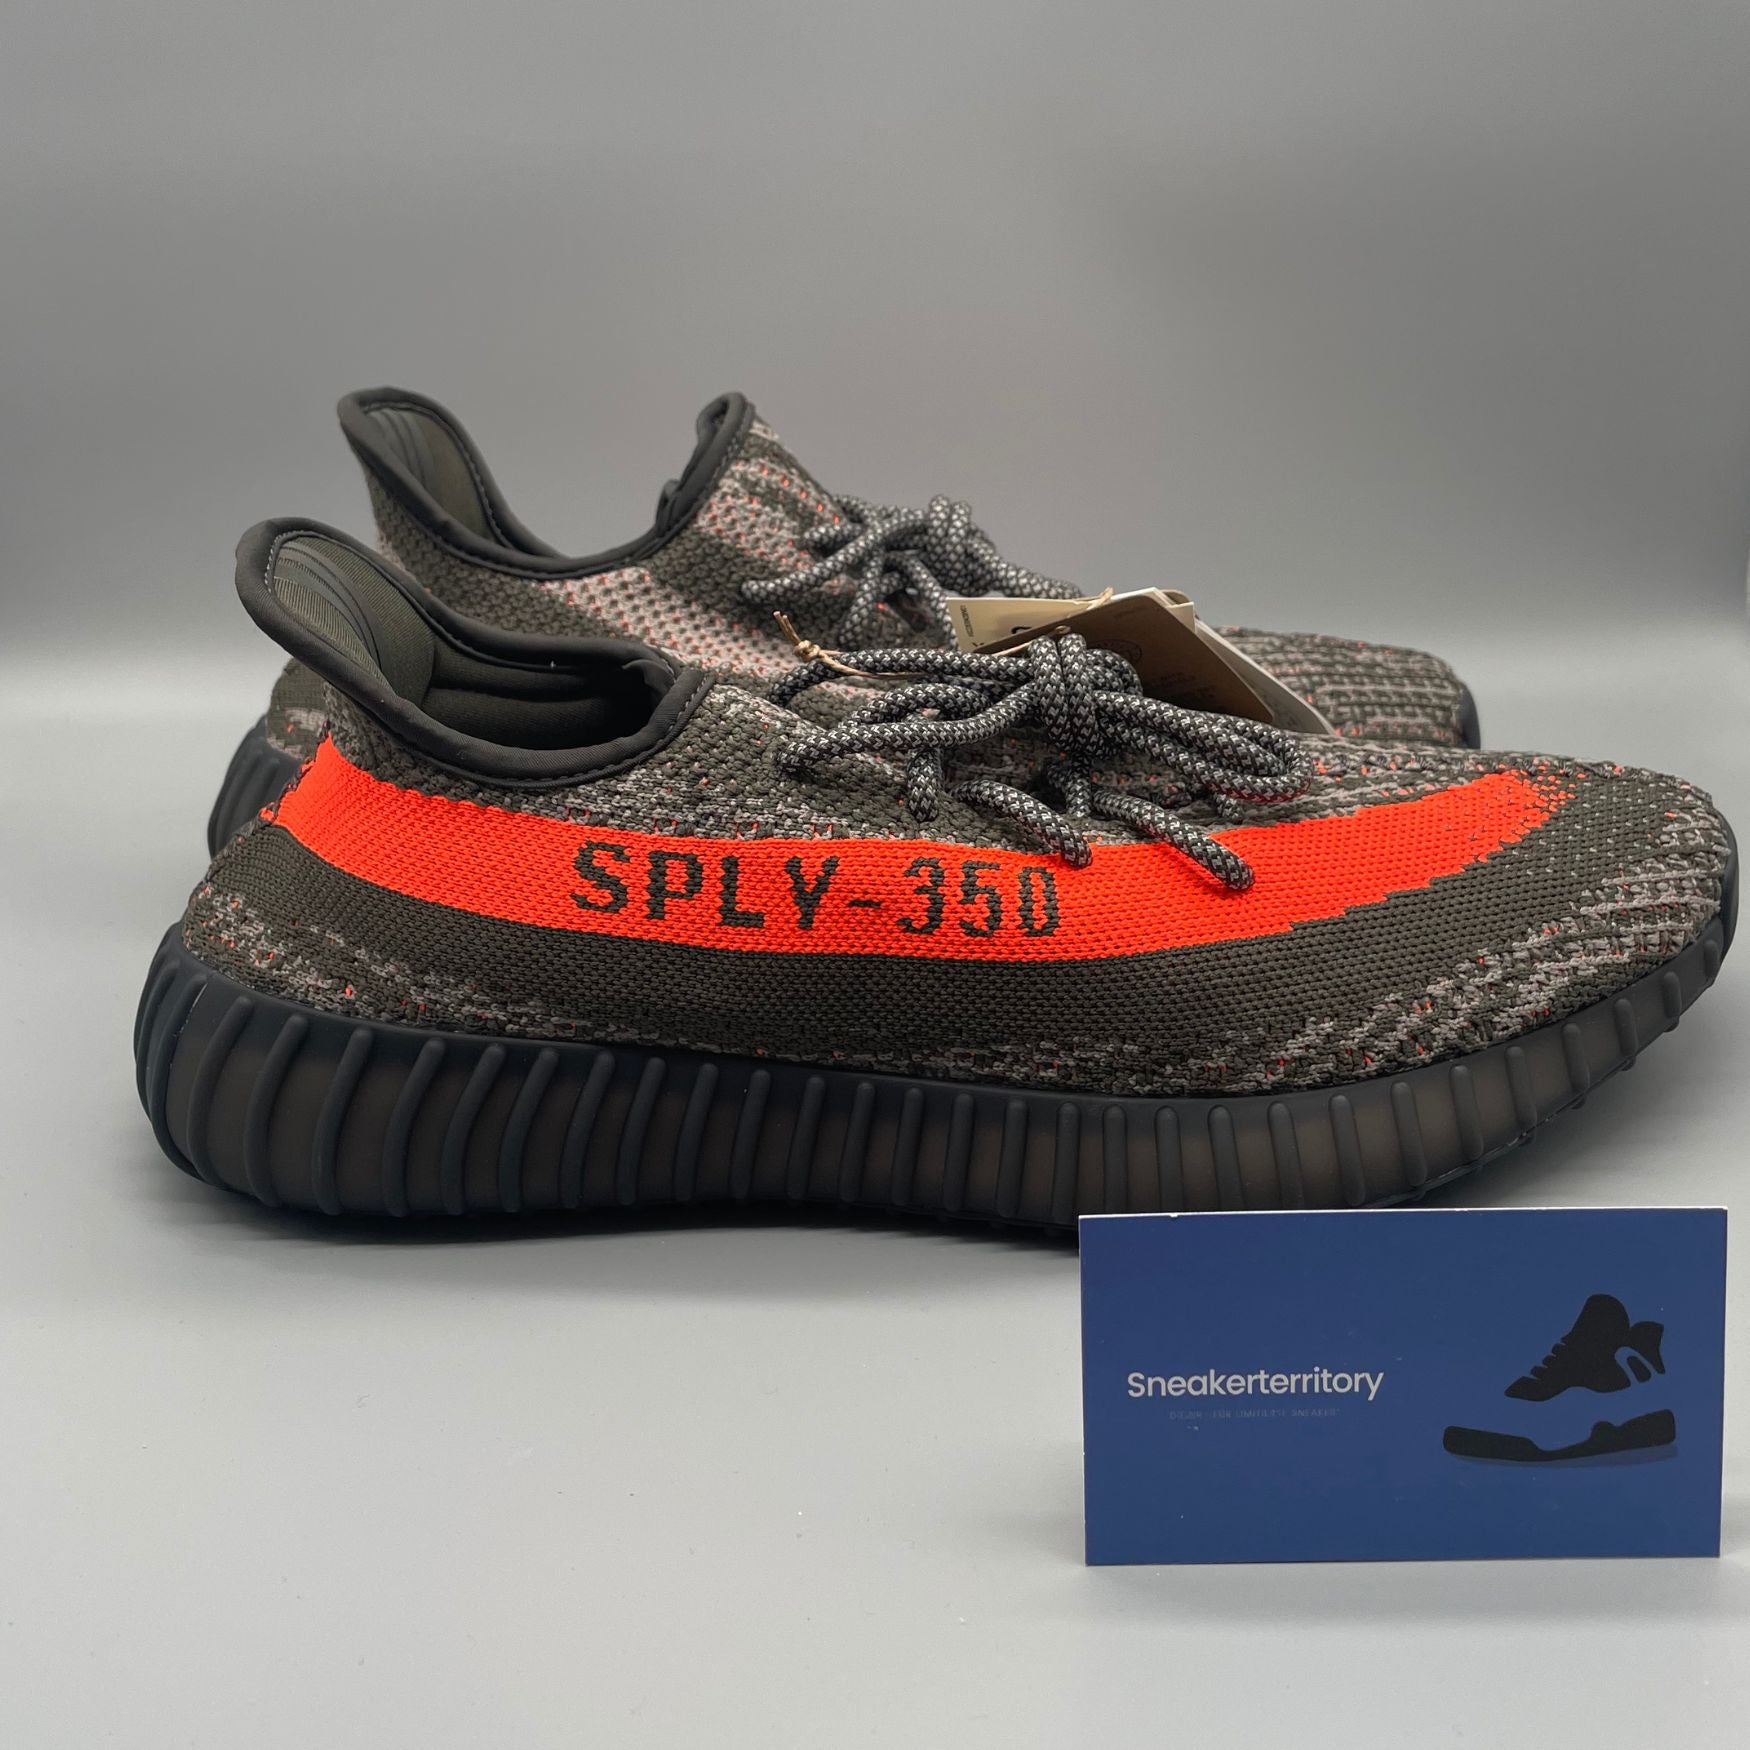 Adidas Yeezy Boost 350 V2 Carbon Beluga -Sneakerterritory; Sneaker Territory 4